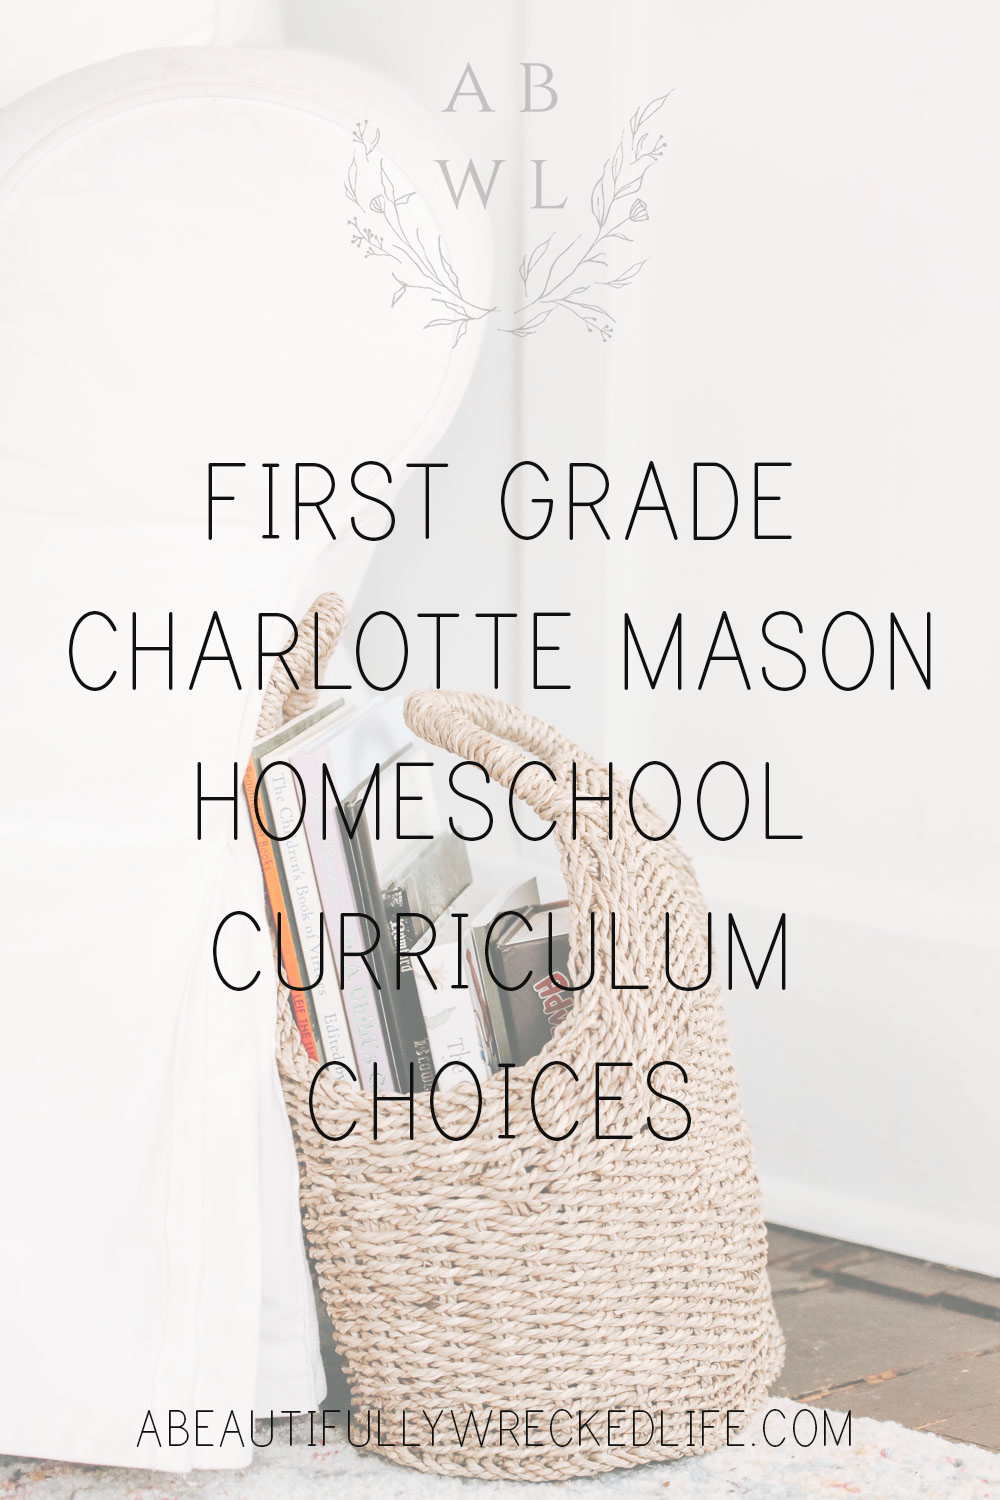 Our First Grade Charlotte Mason Homeschool Curriculum Choices